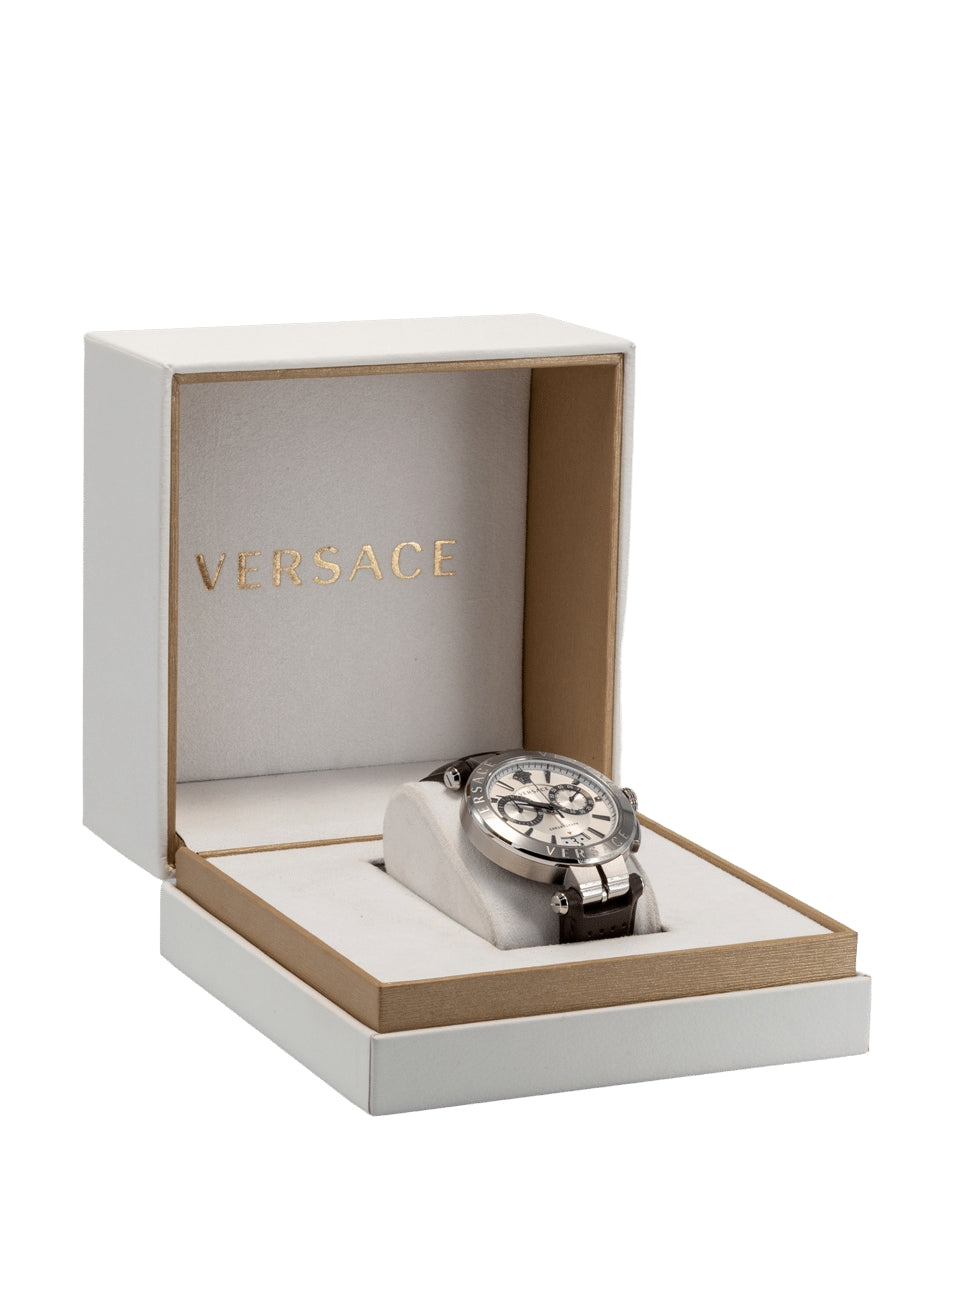 Versace Men's Aion Chronograph Watch VE1D00119 Silver Brown